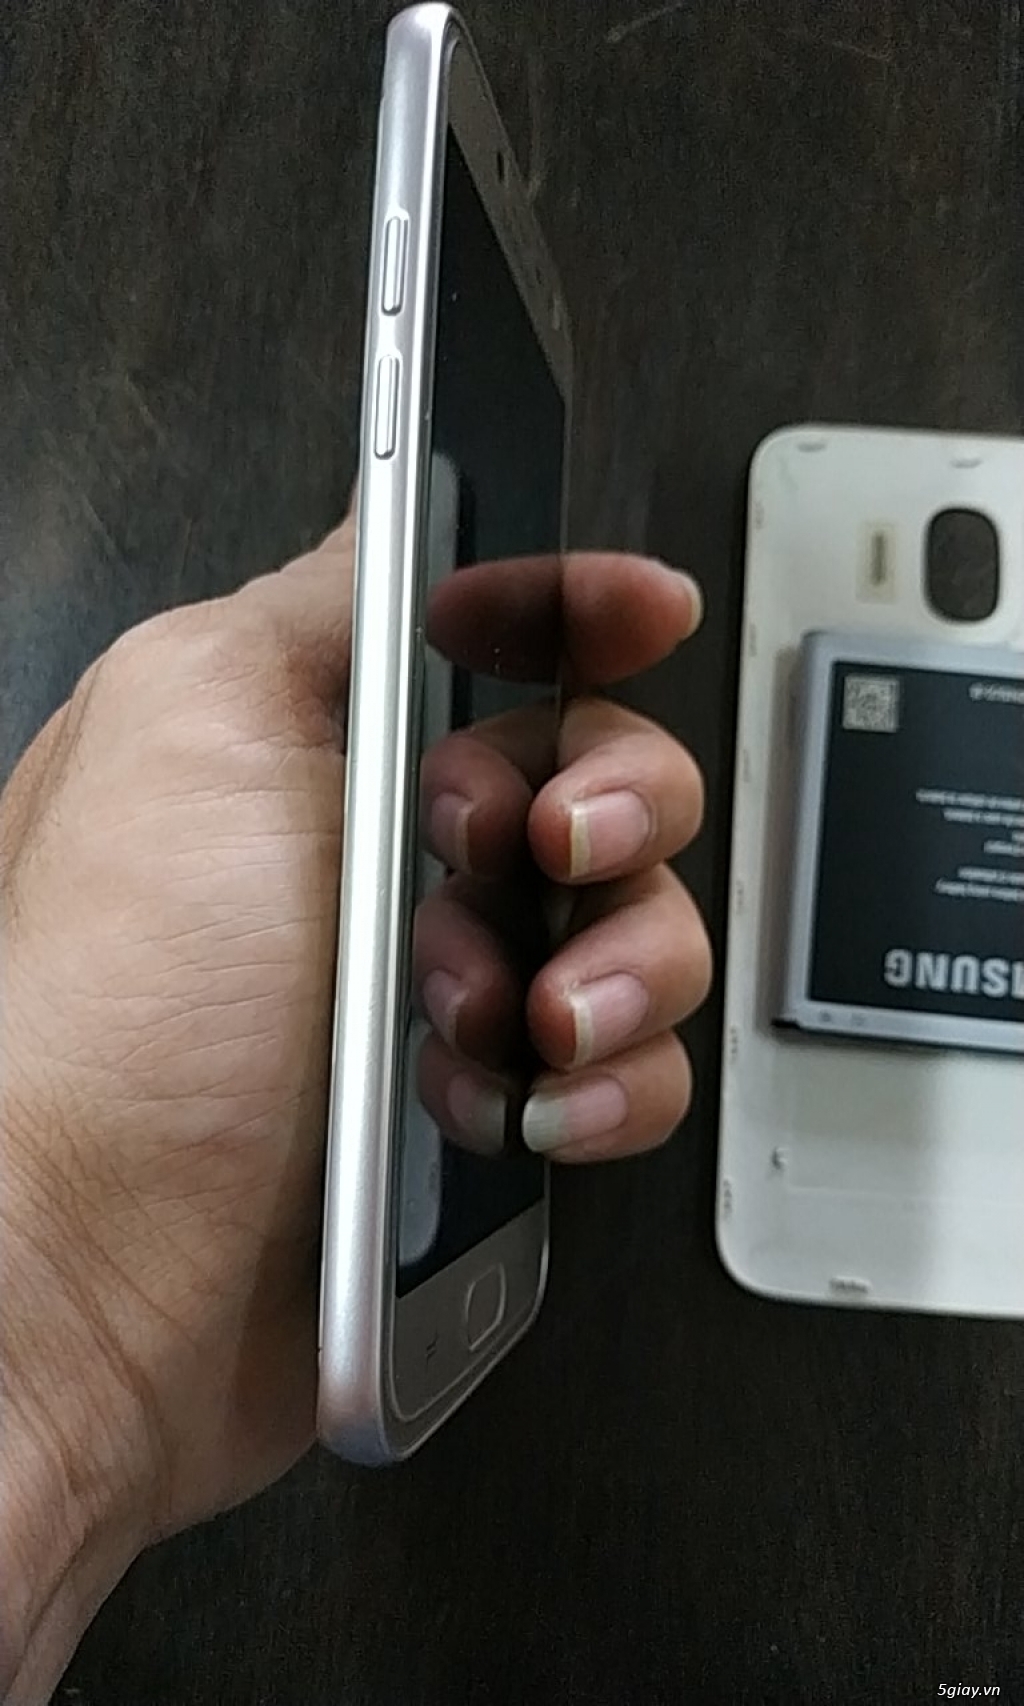 Samsung j2 pro 2018 còn bh tgdđ - 5